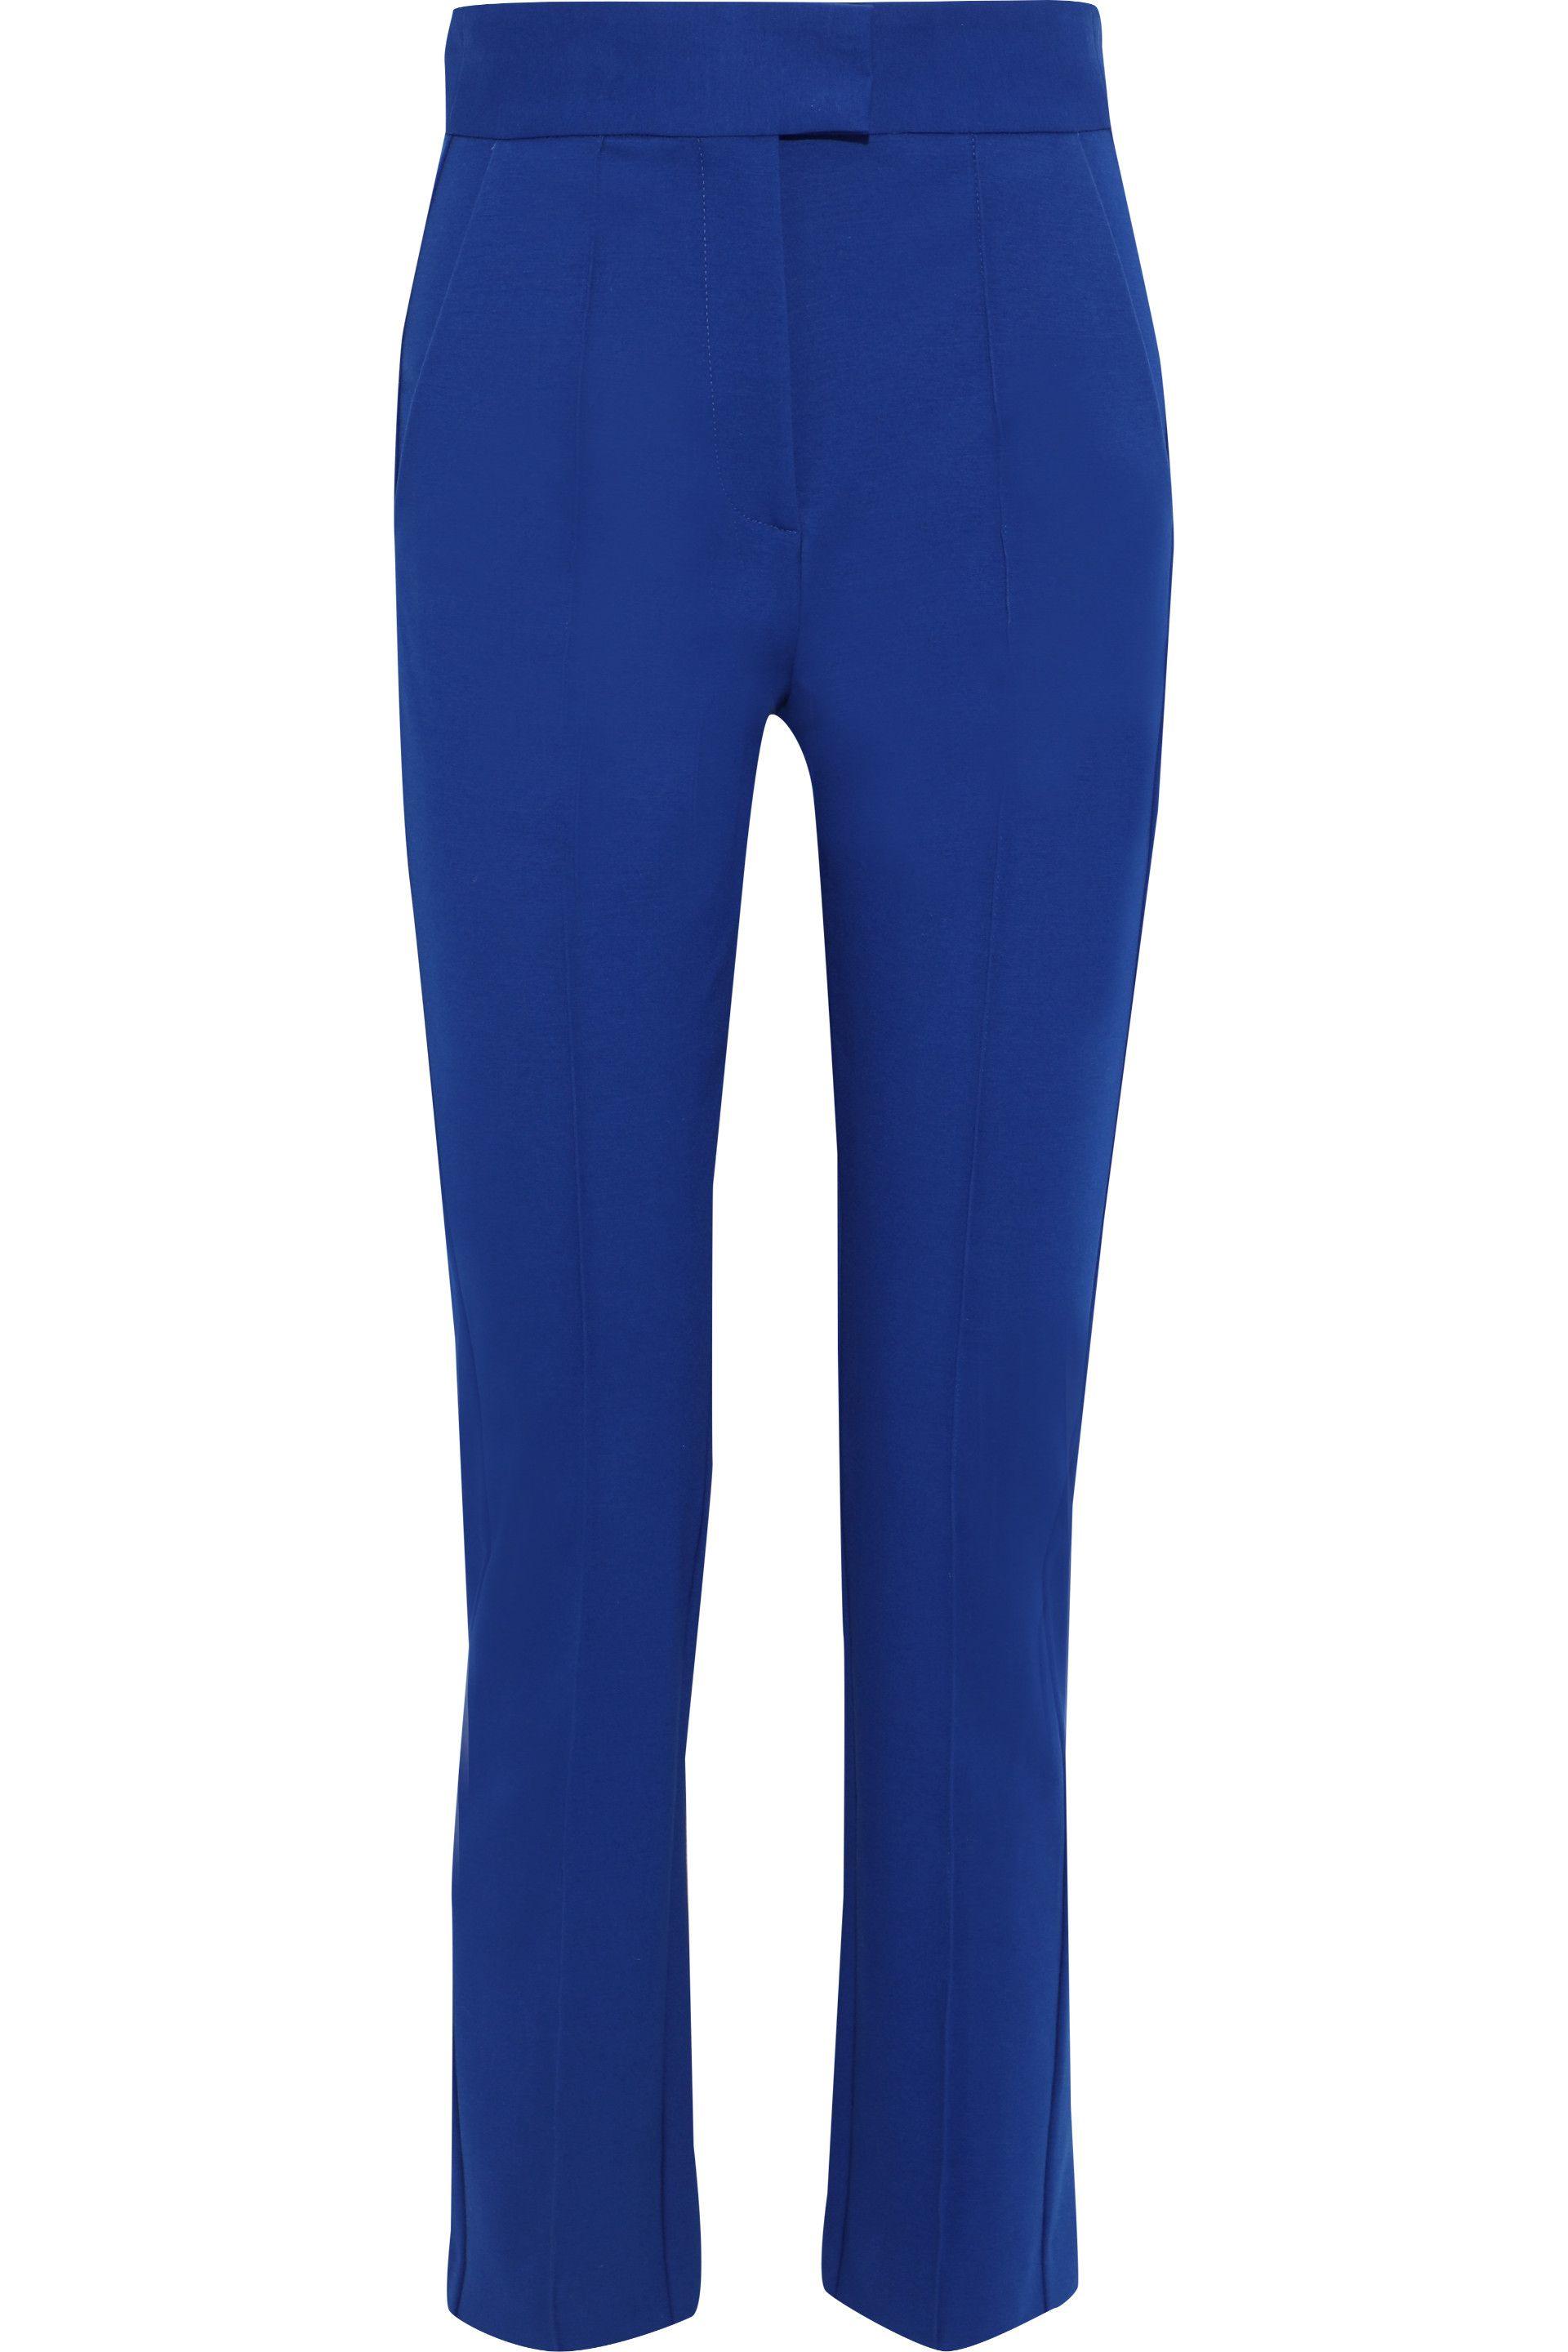 Lyst - MSGM Woman Stretch Cotton-cady Straight-leg Pants Royal Blue in Blue